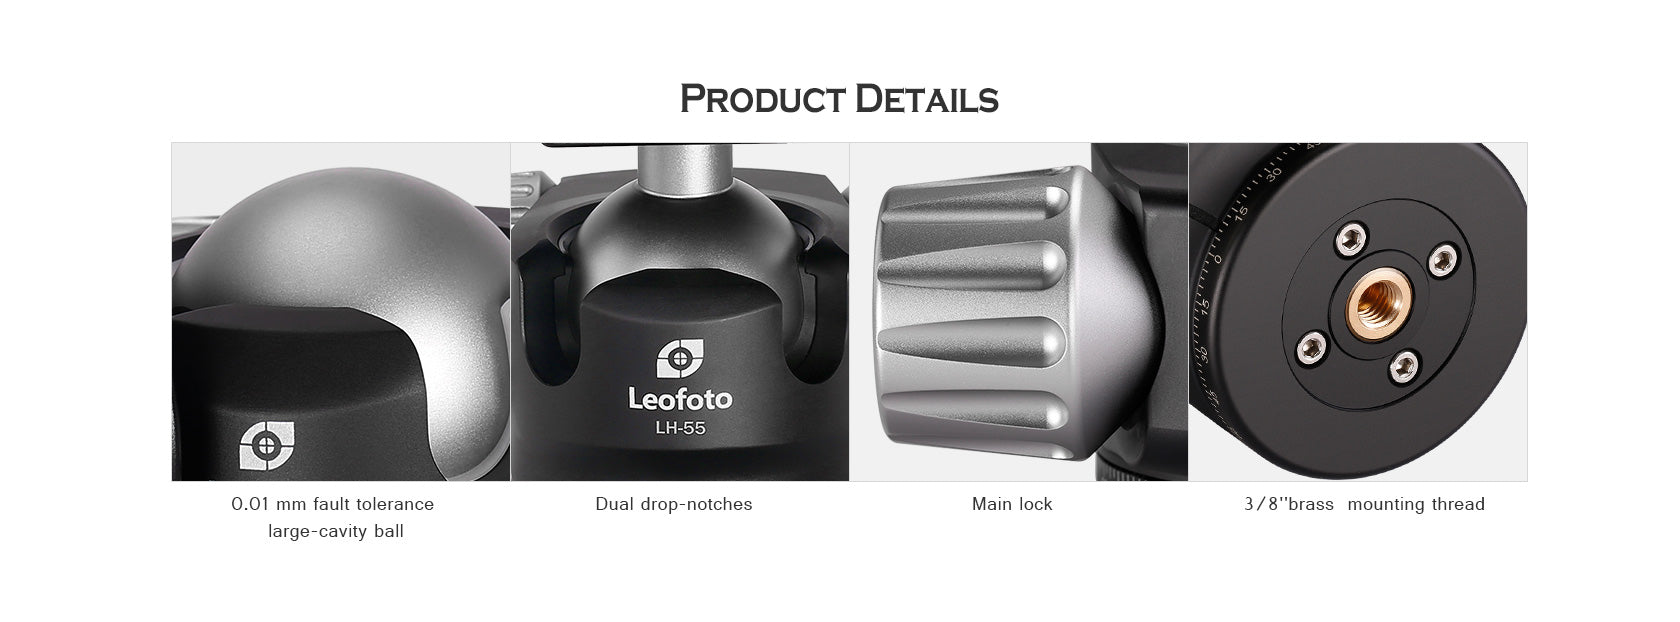 Leofoto LM-324CL(Long) Tripod with 75mm Video Bowl+Platform and Bag